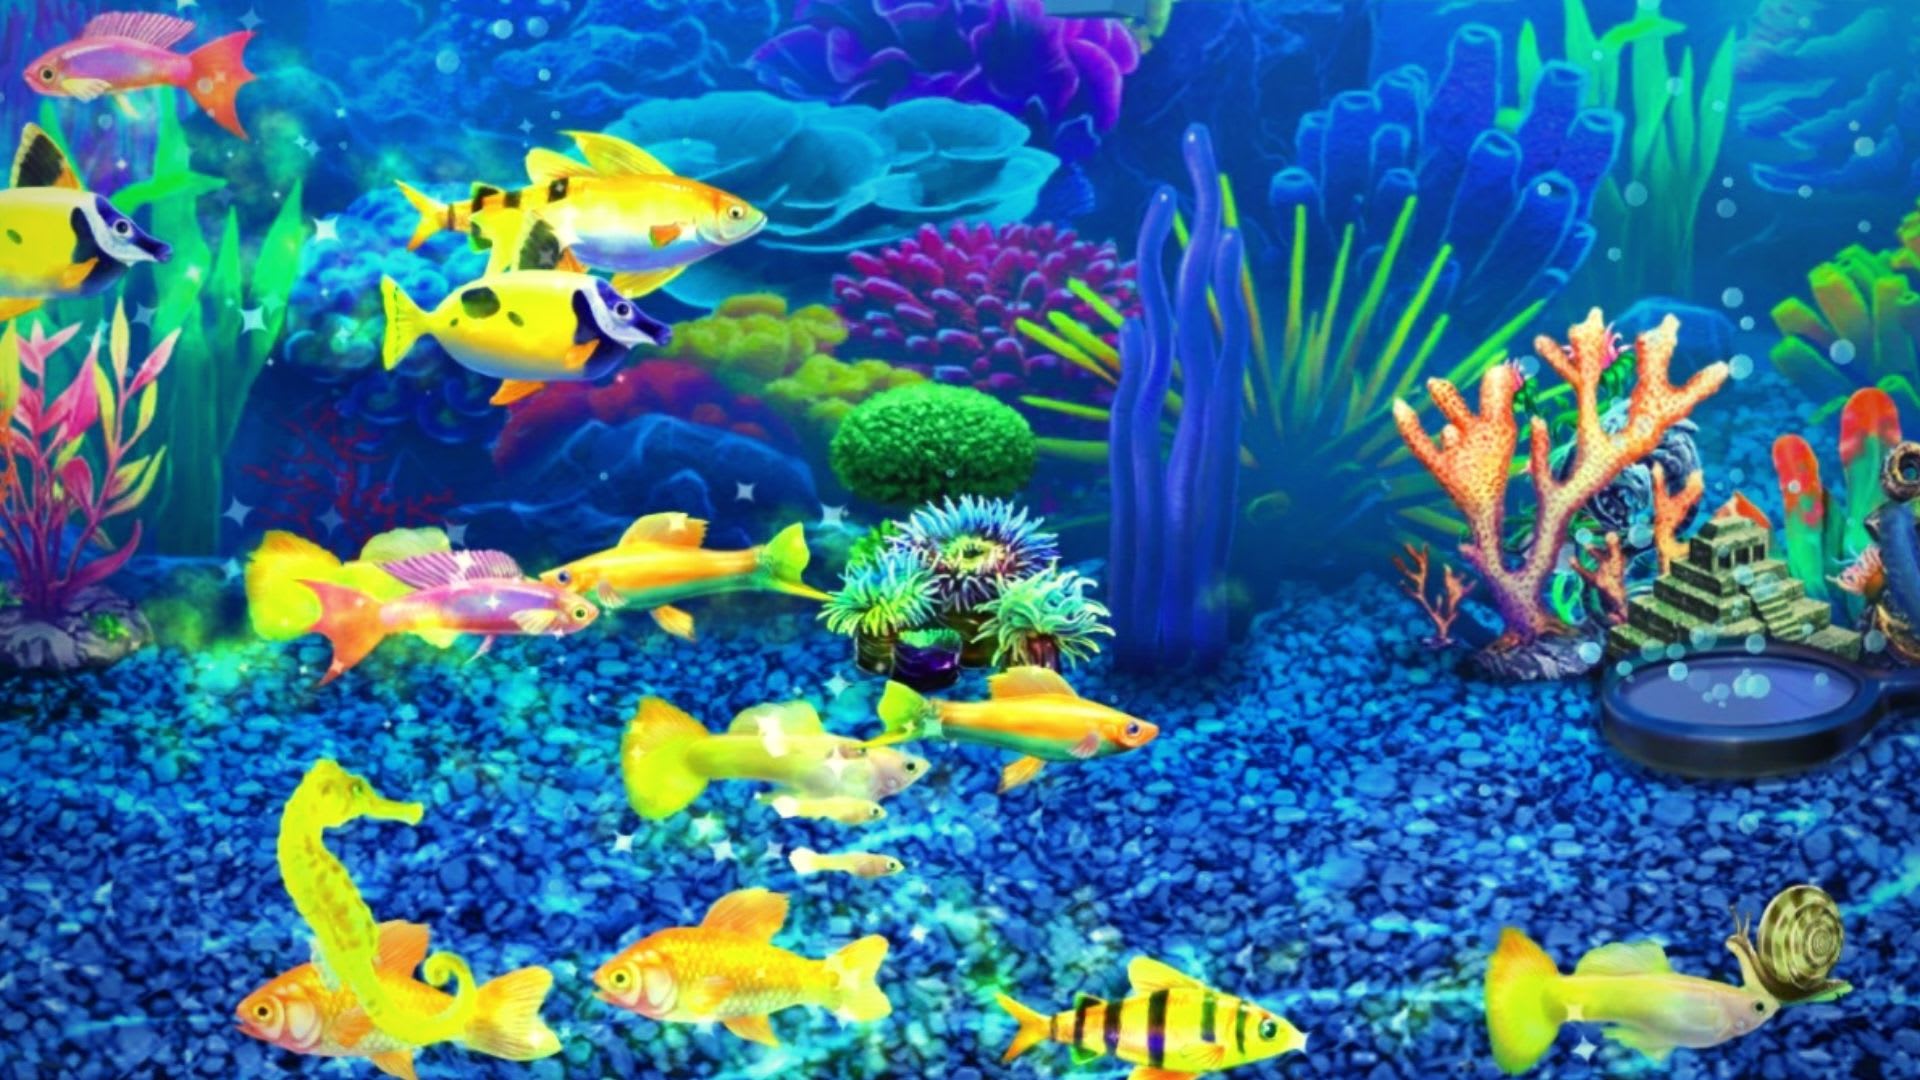 Fish Tycoon 2 Virtual Aquarium for iOS